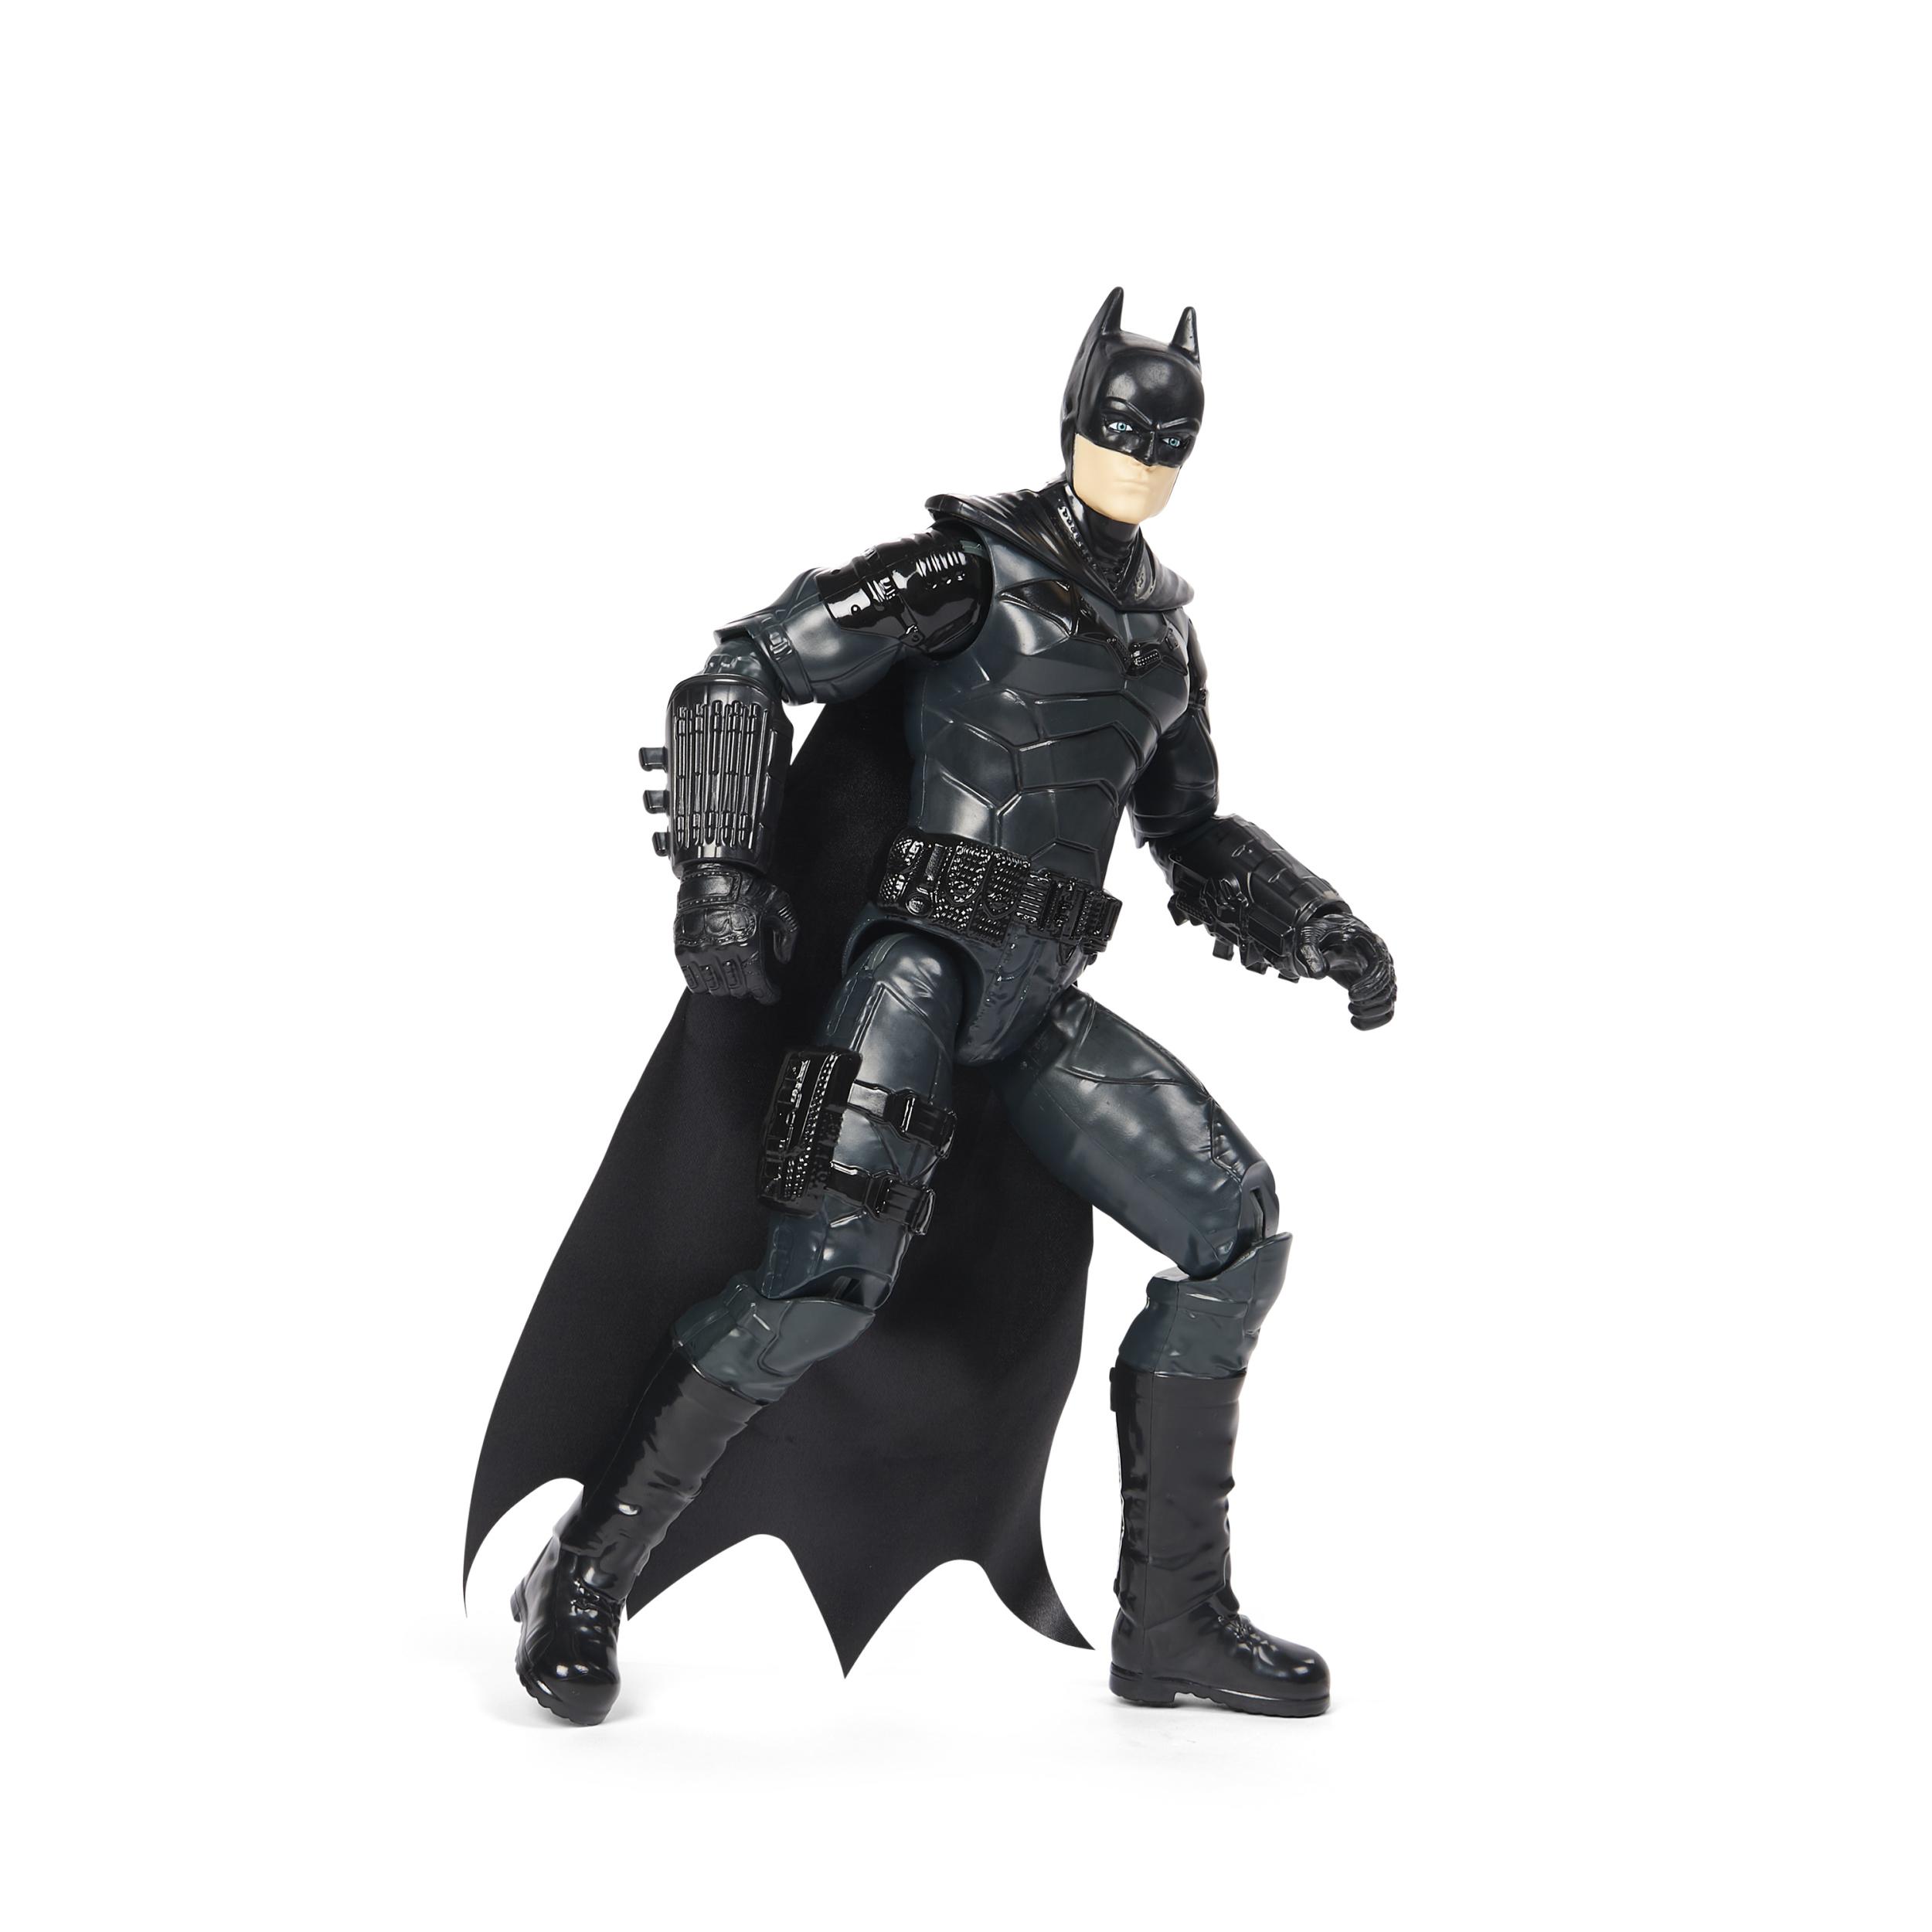 The batman figure